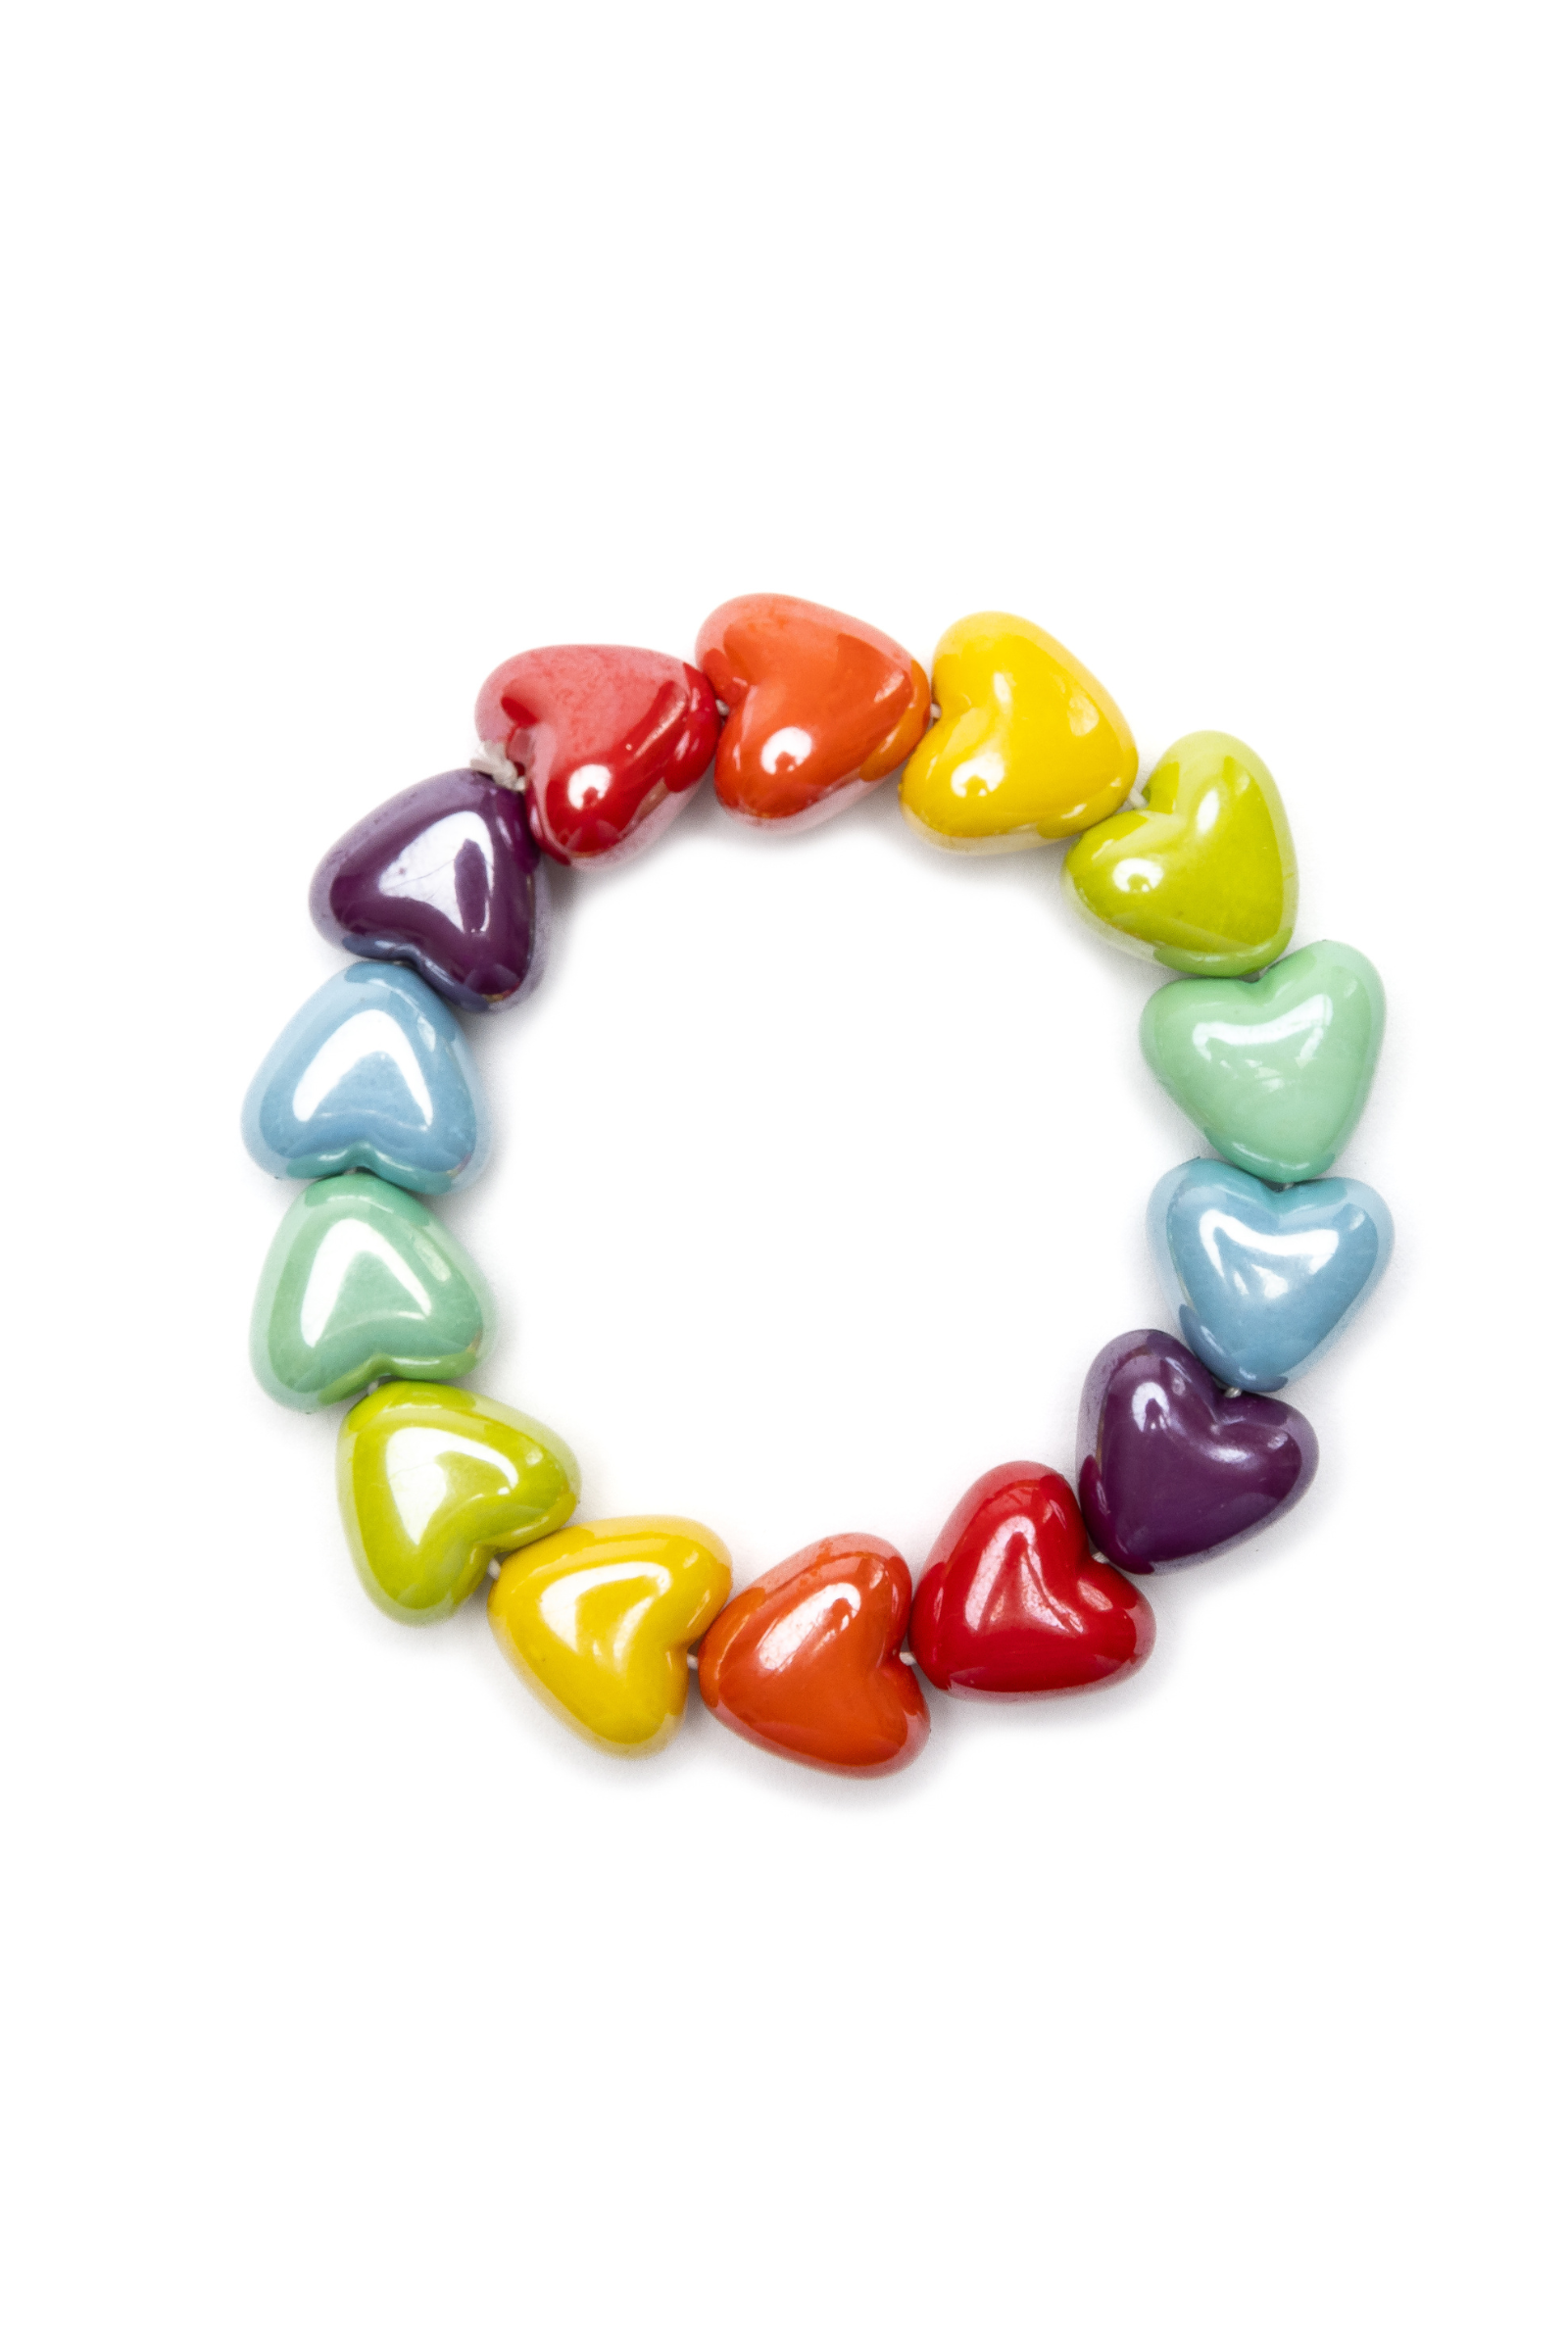 Candy Heart Bracelets - Bunny Shapiro